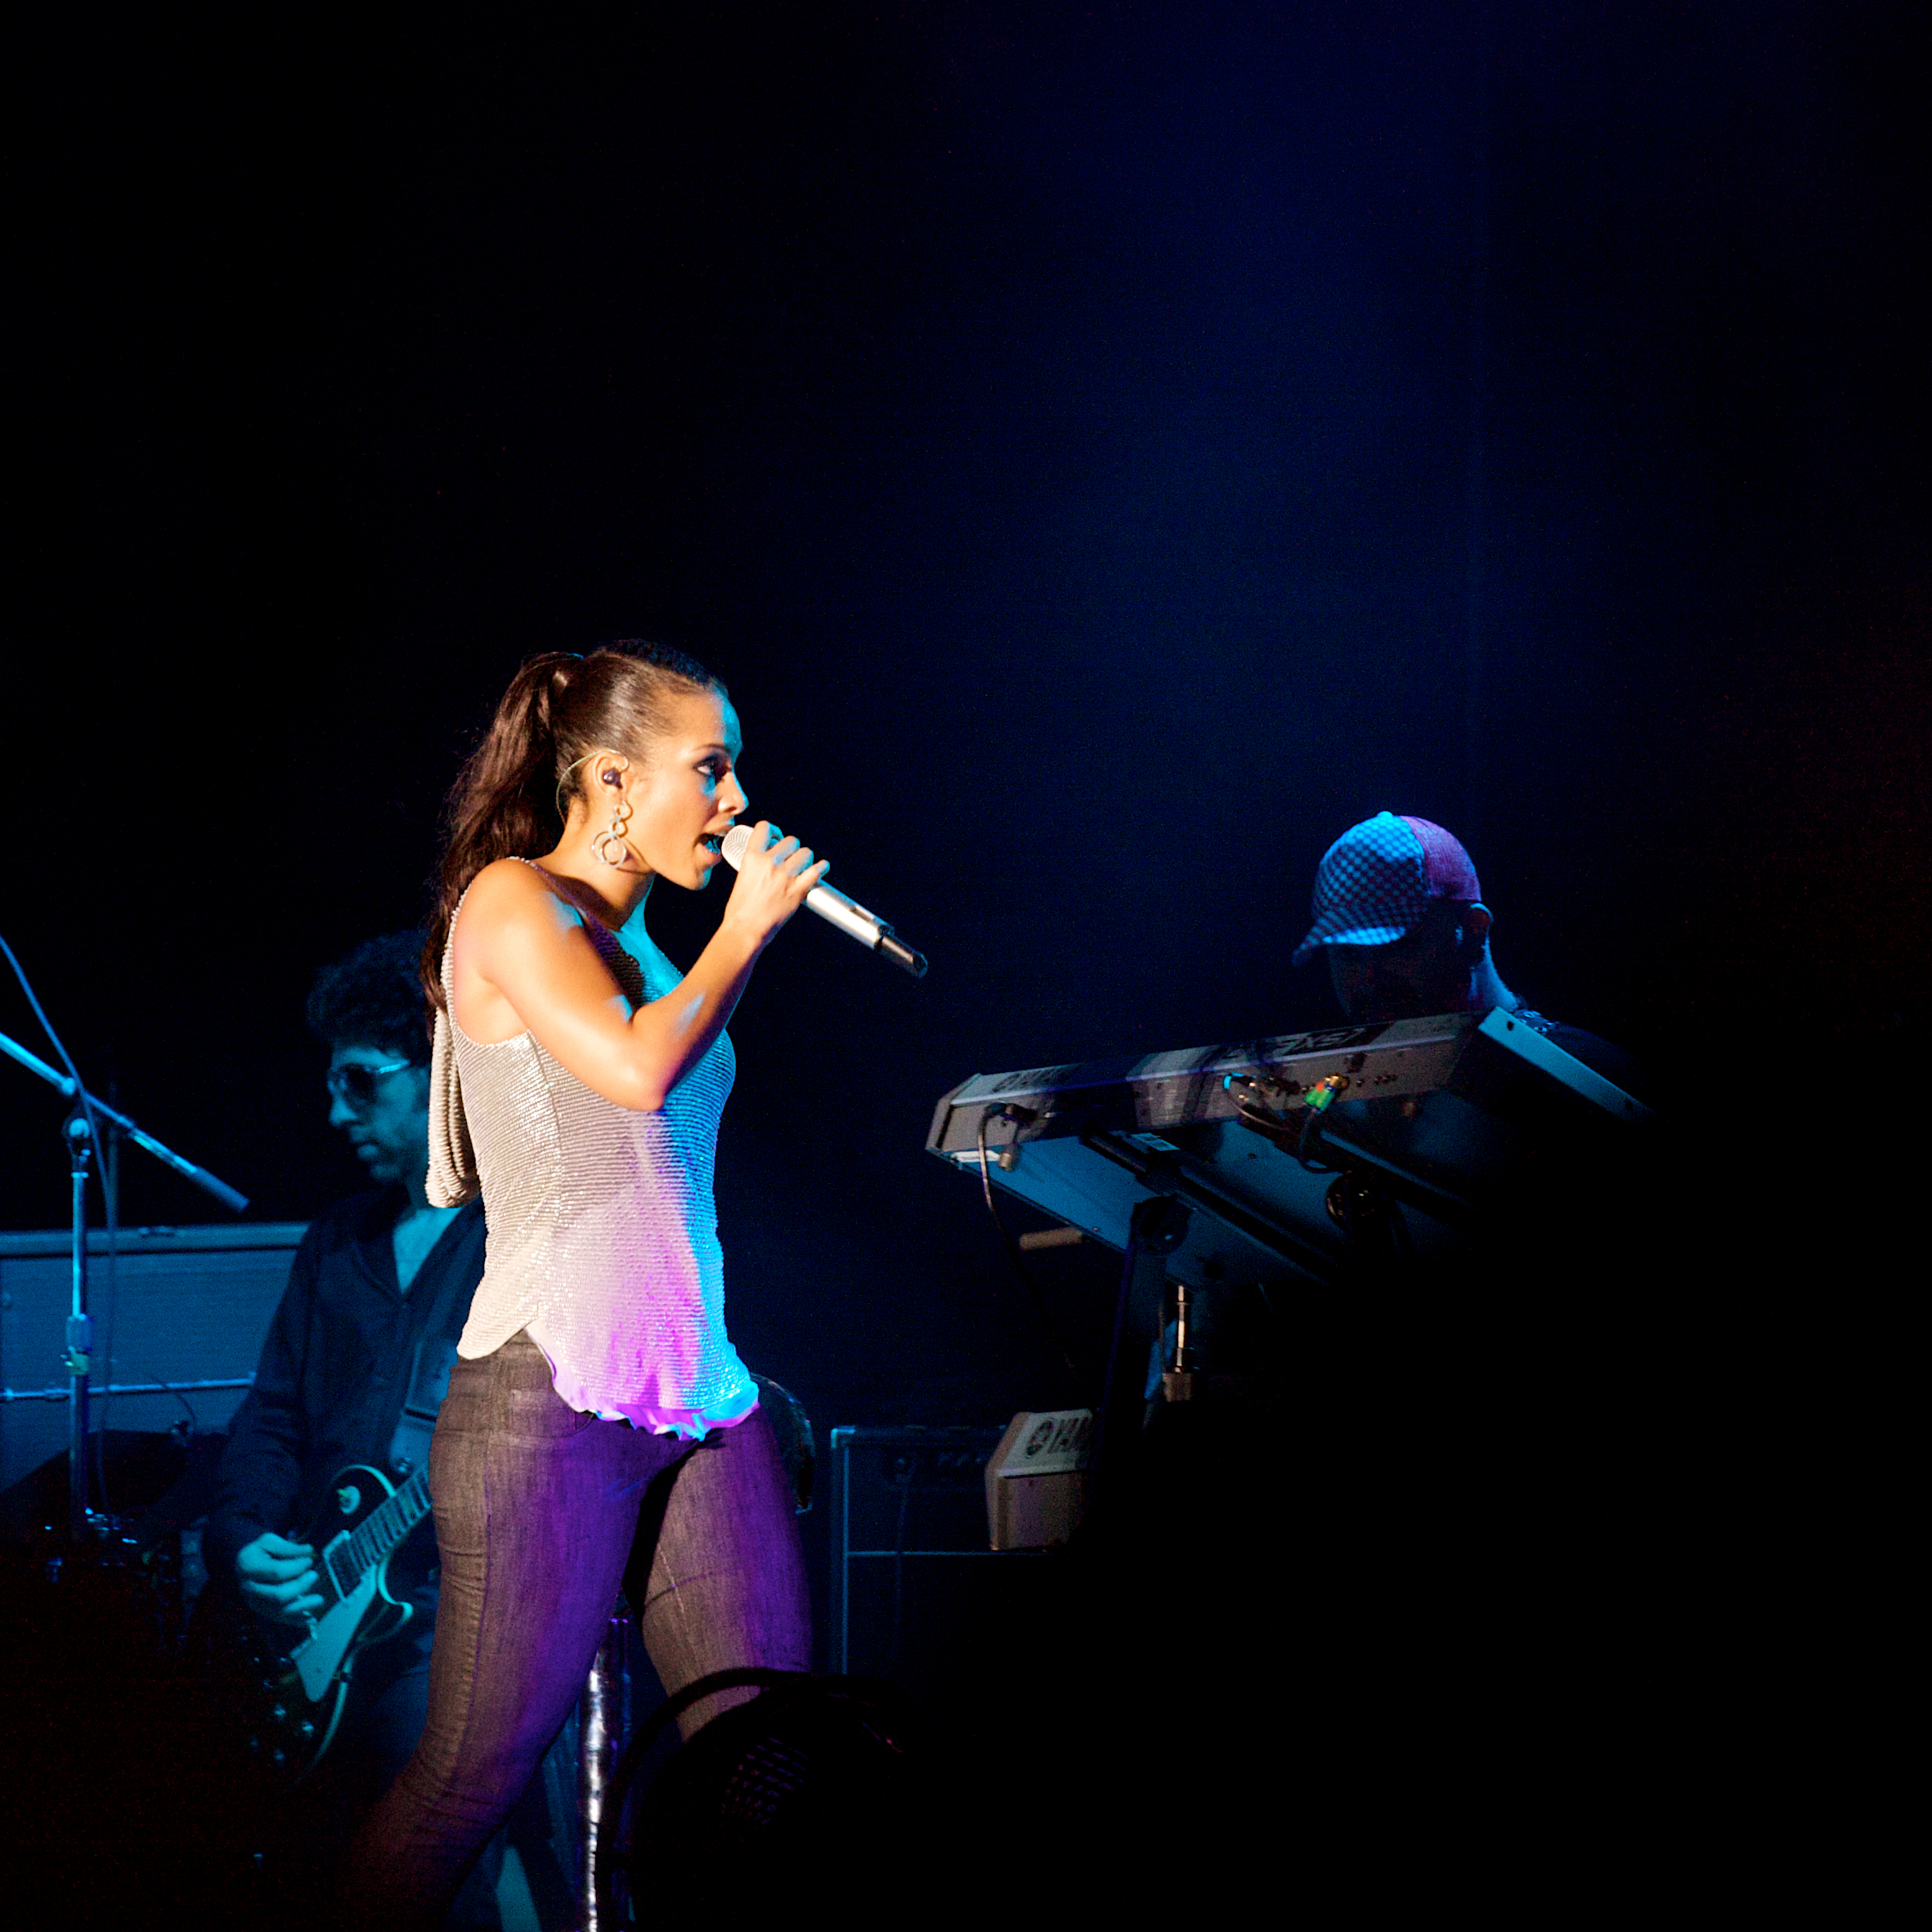 http://upload.wikimedia.org/wikipedia/commons/f/f5/Alicia_Keys_at_the_Summer_Sonic_Festival.jpg